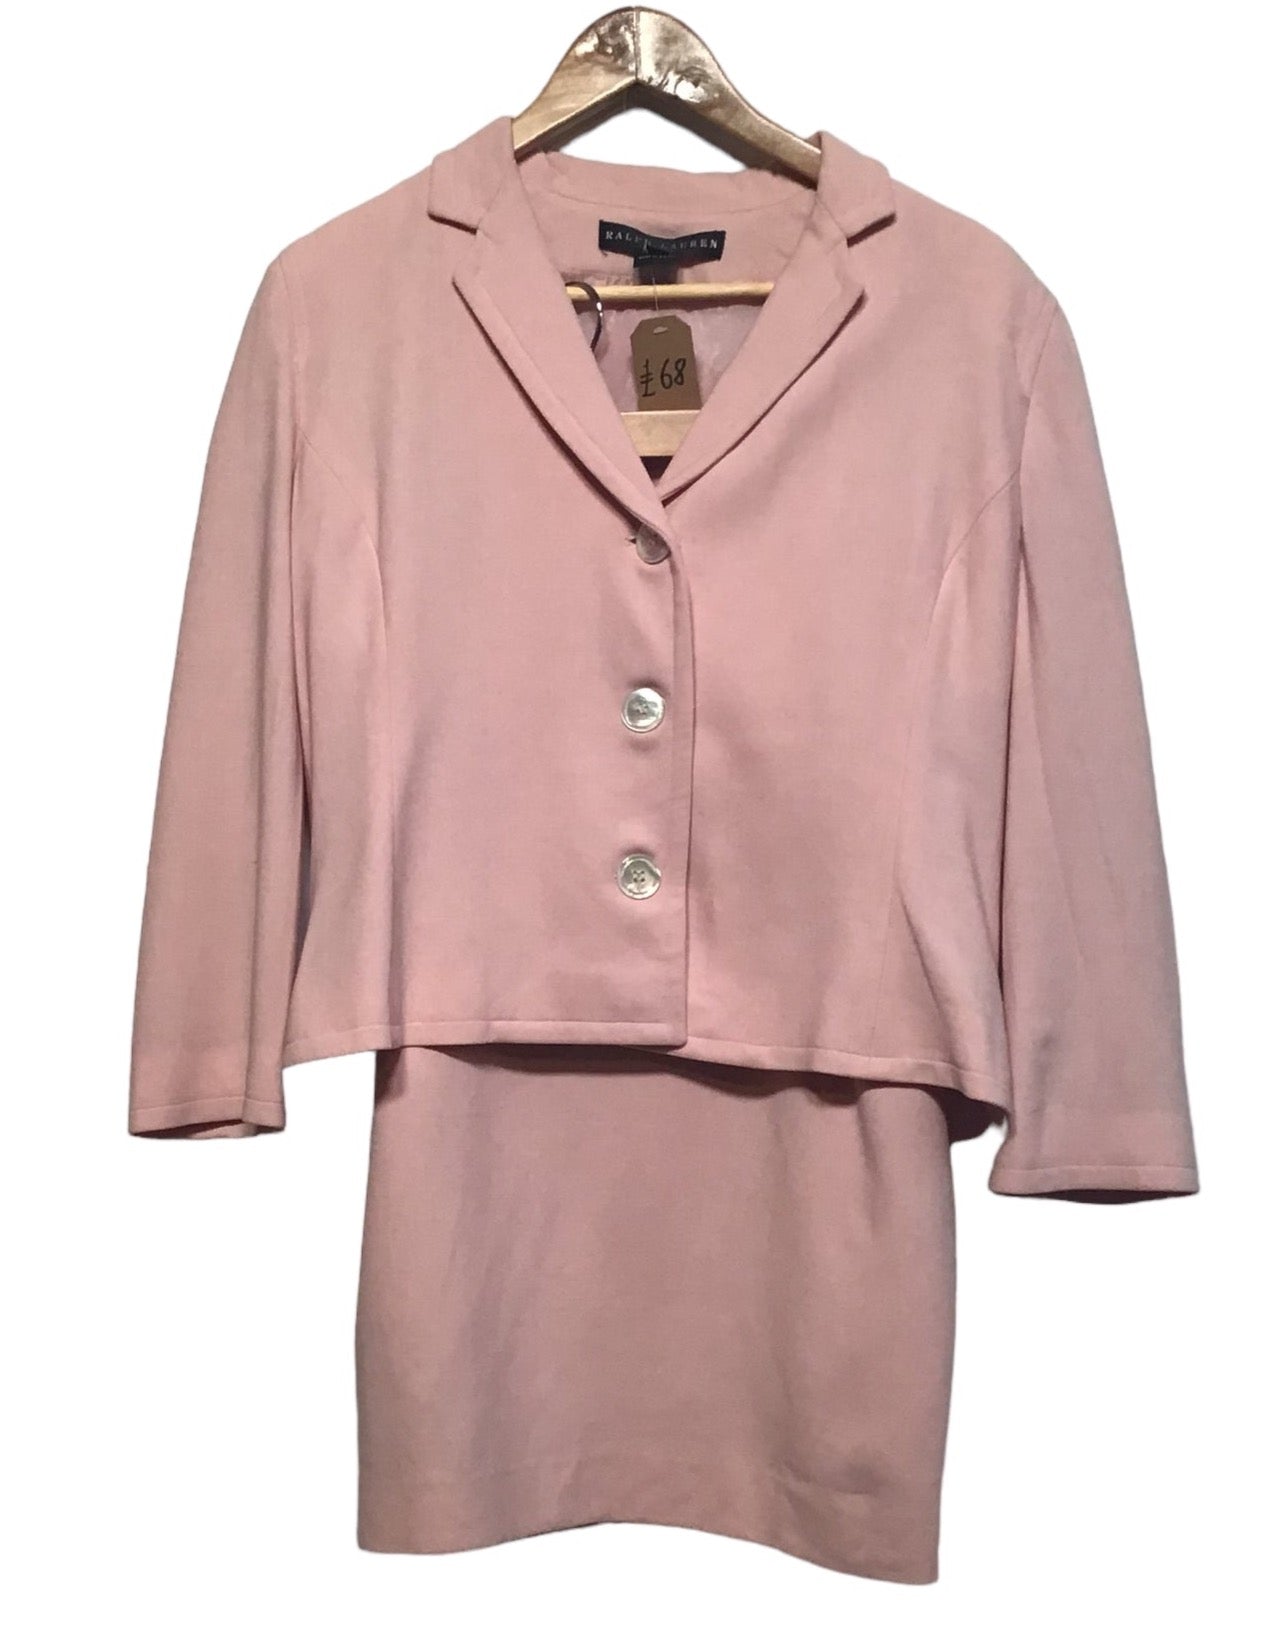 Ralph Lauren Pink Jacket and Skirt Set (Size M)